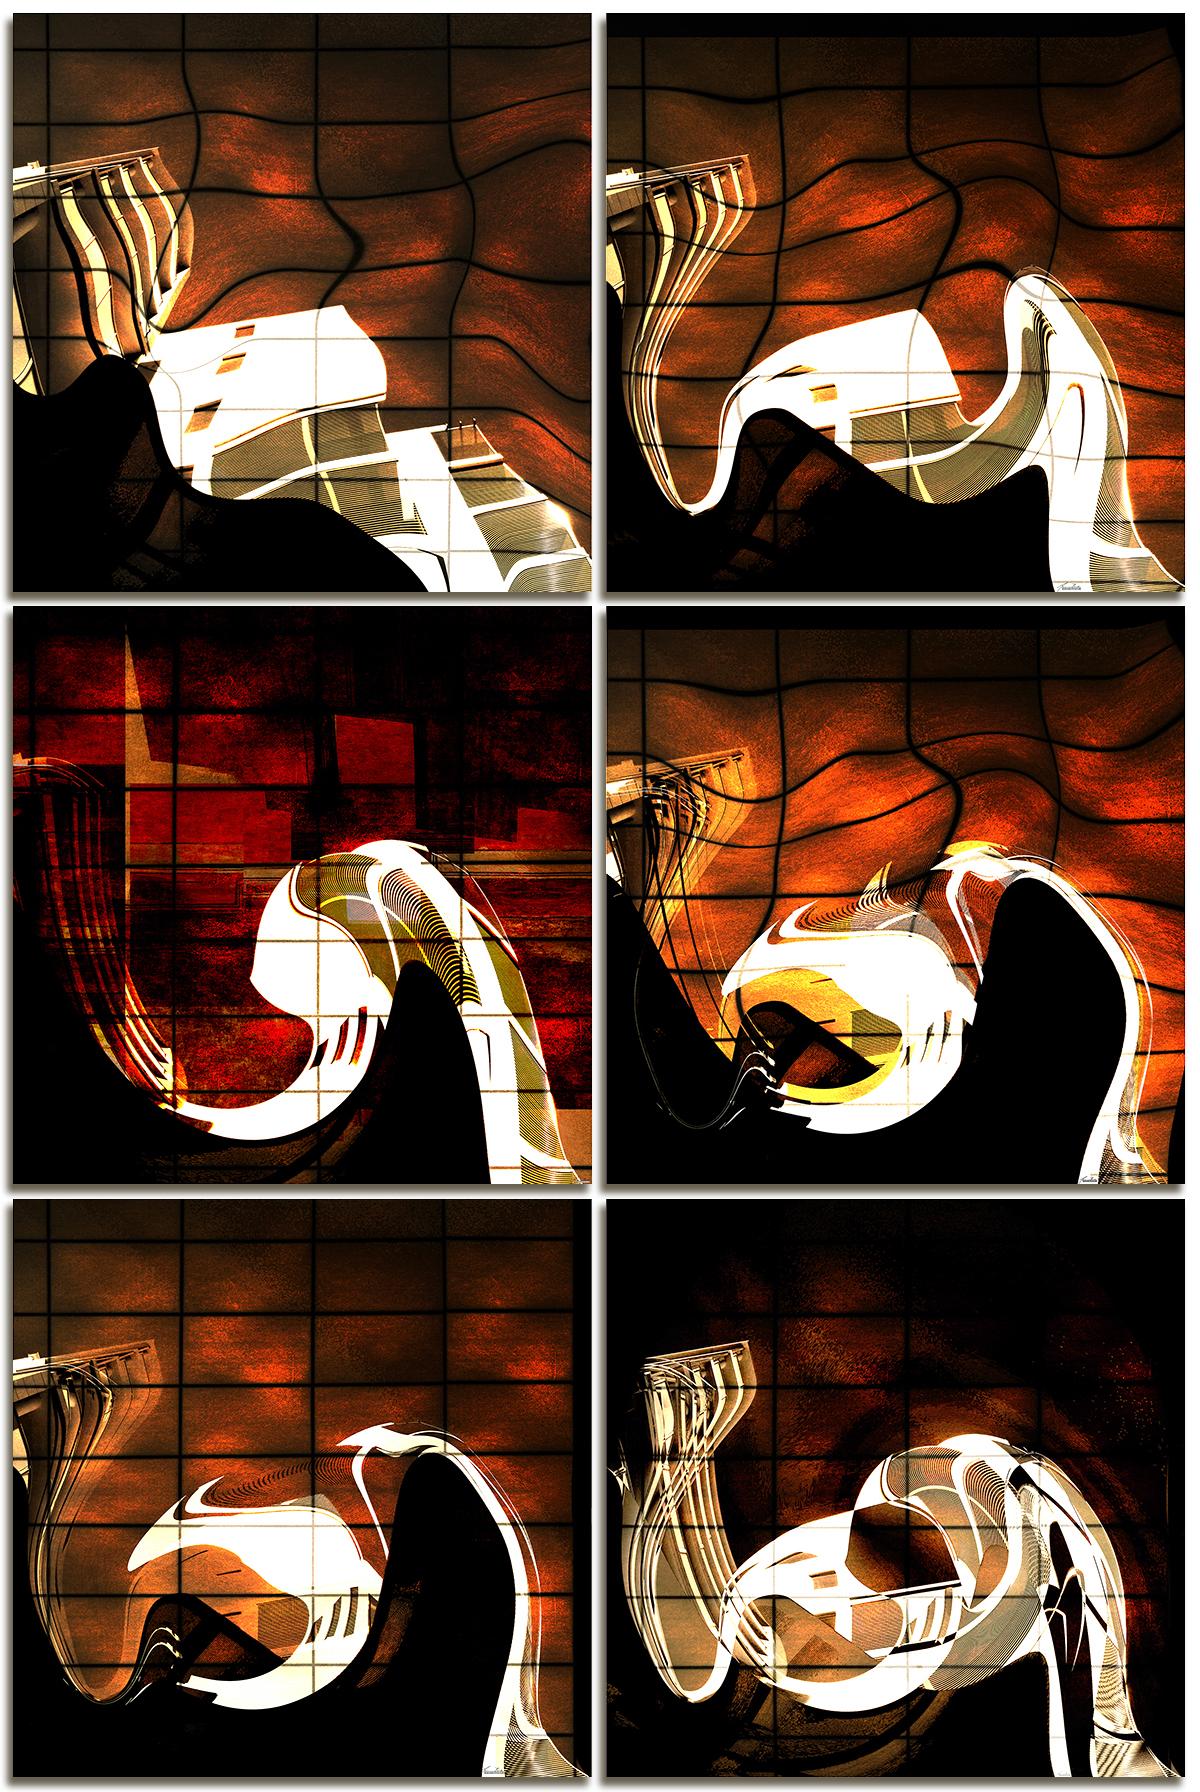 Marvin Berk Abstract Print - "Heatwave Sextych" - Abstract digital photomontage in dark colors. 6 art panels.